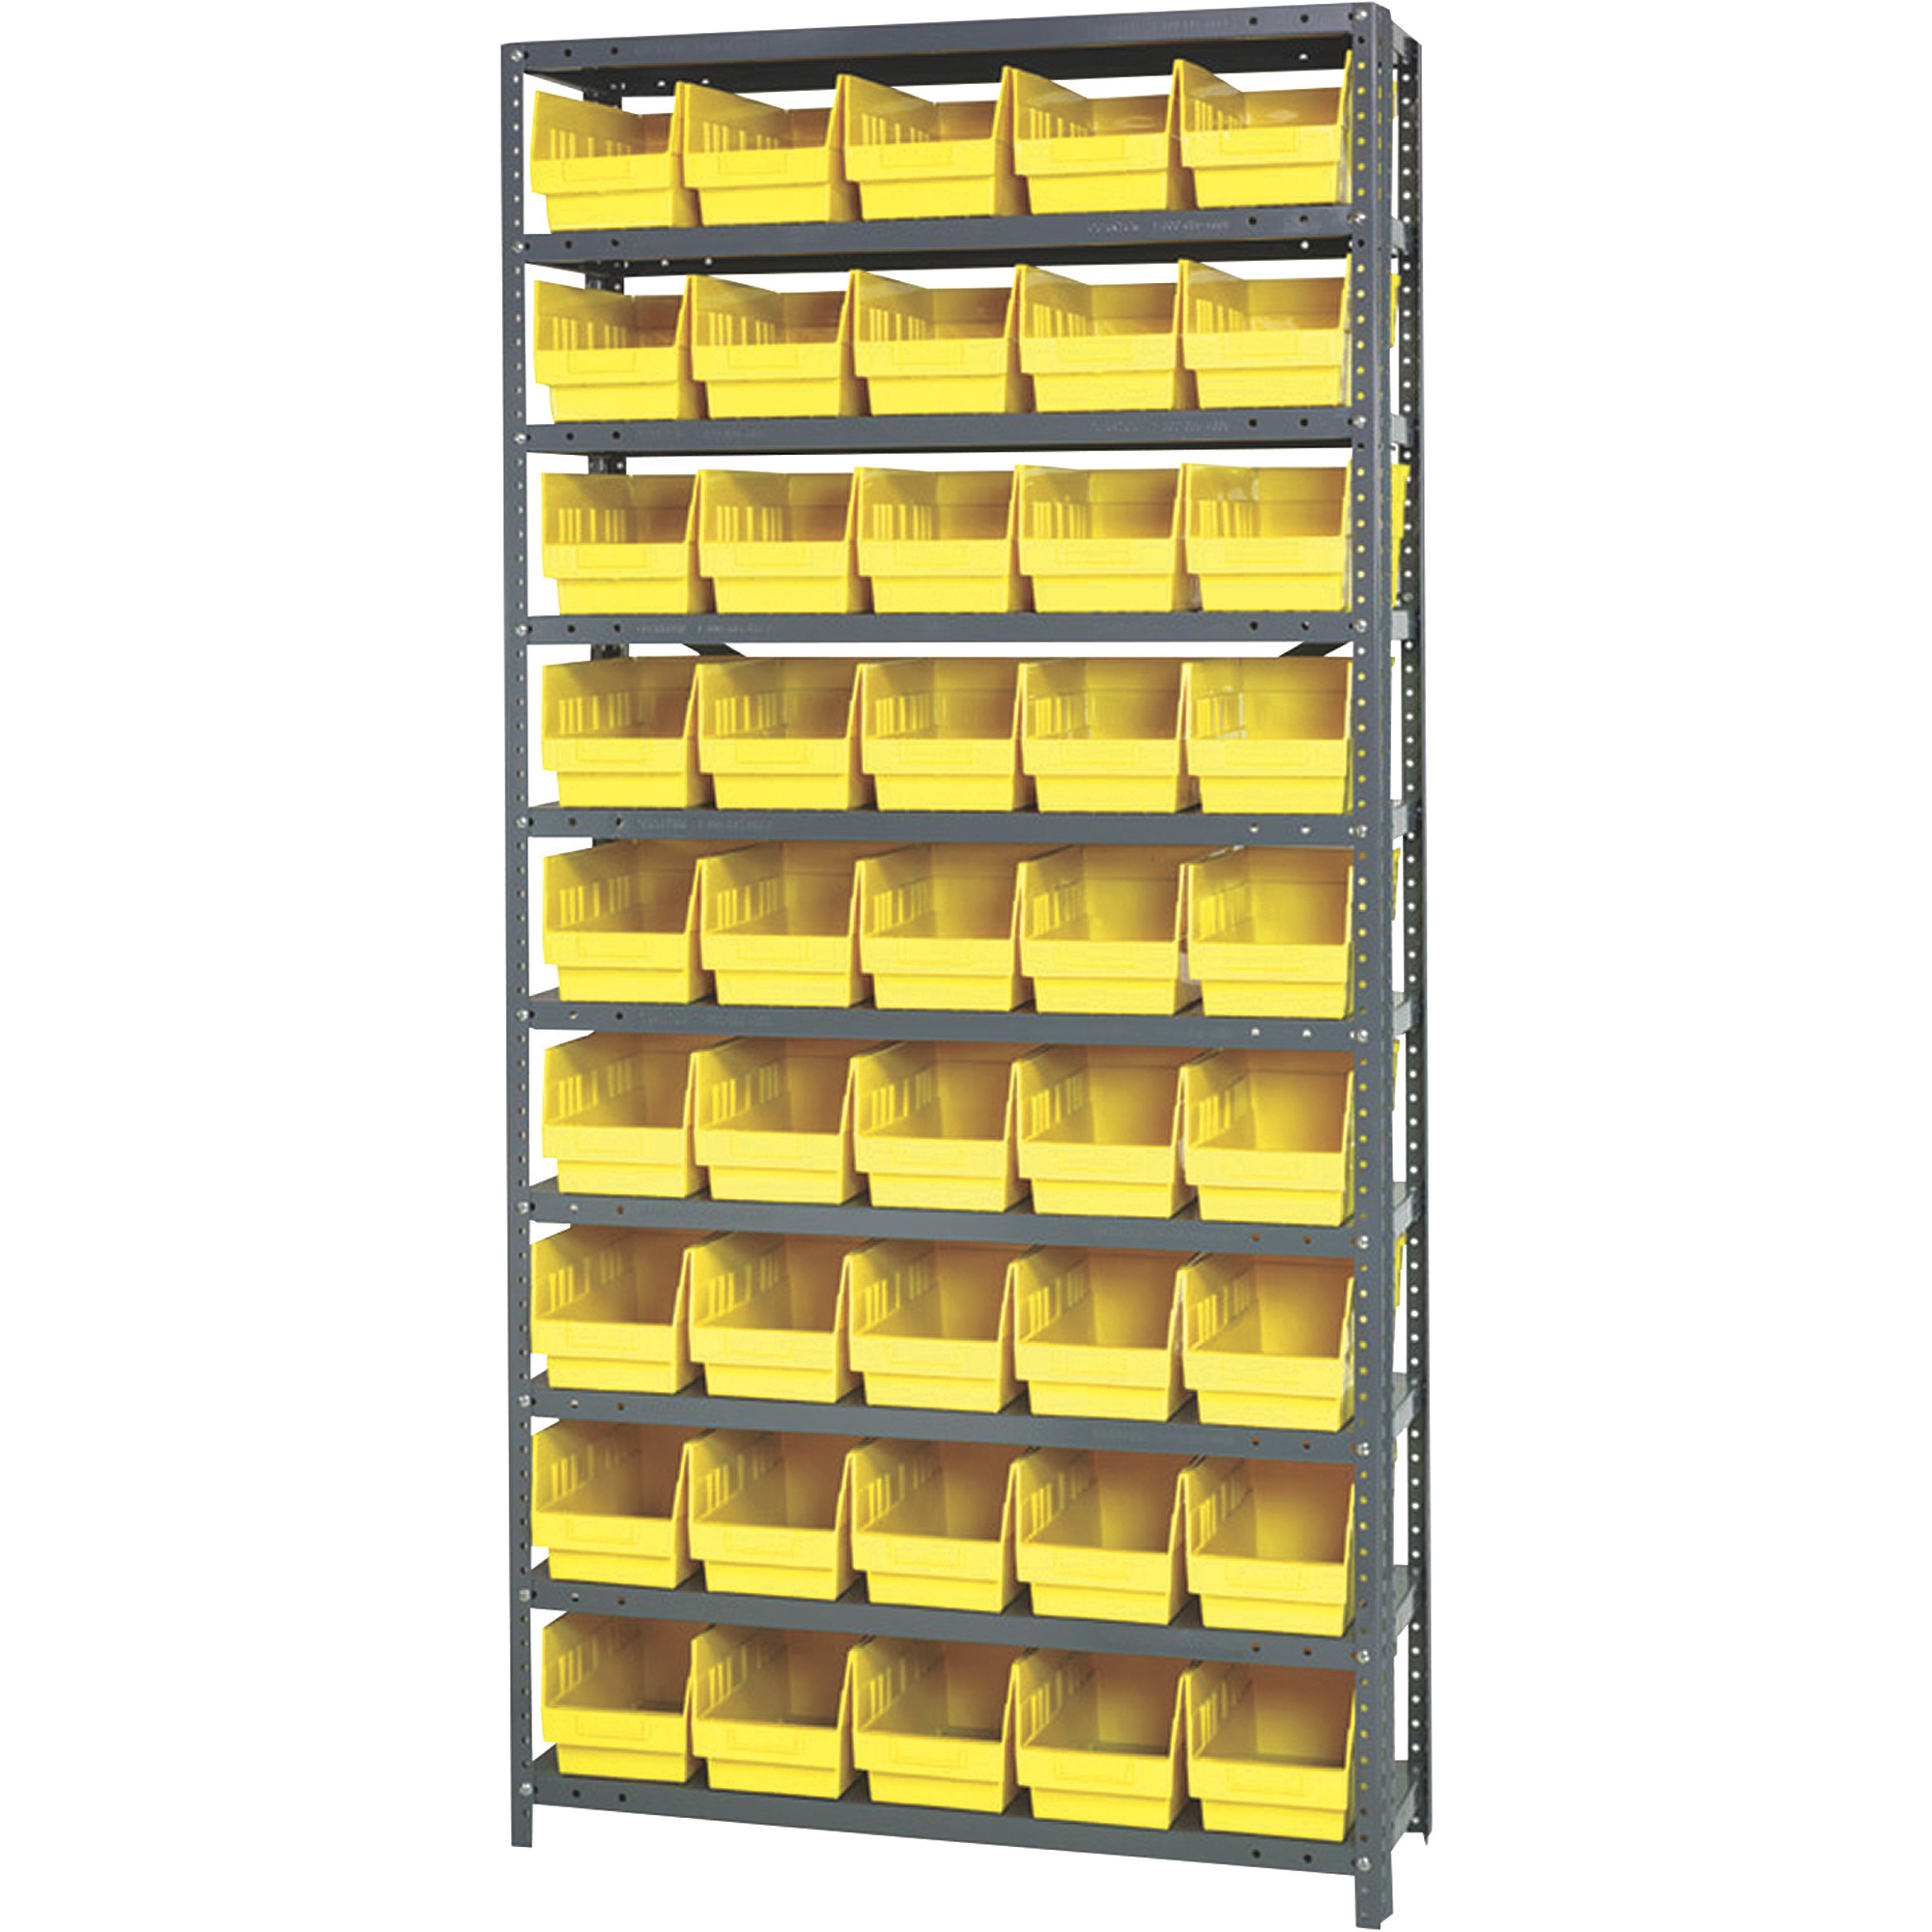 Quantum Storage Metal Shelving Unit with 45 Bins, 36Inch W x 12Inch D x 75Inch H, Yellow, Model 1275-202YL